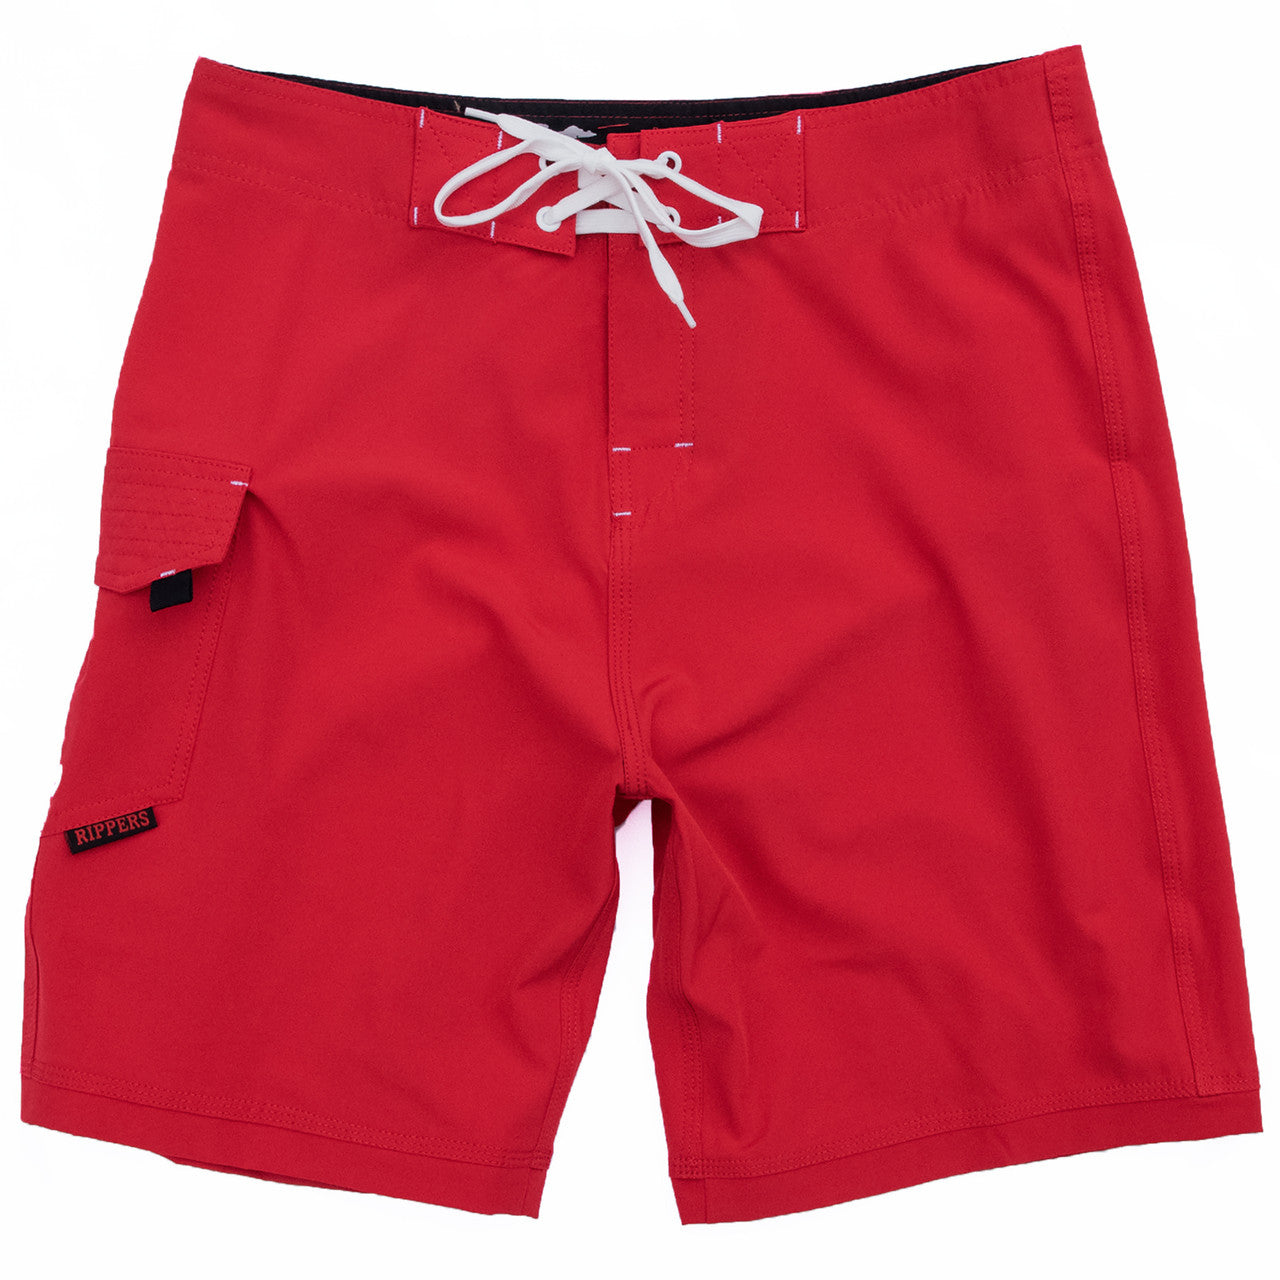 Lifeguard boardshort Uniform Red Stretch swim trunks United States Lifeguard Association  approved